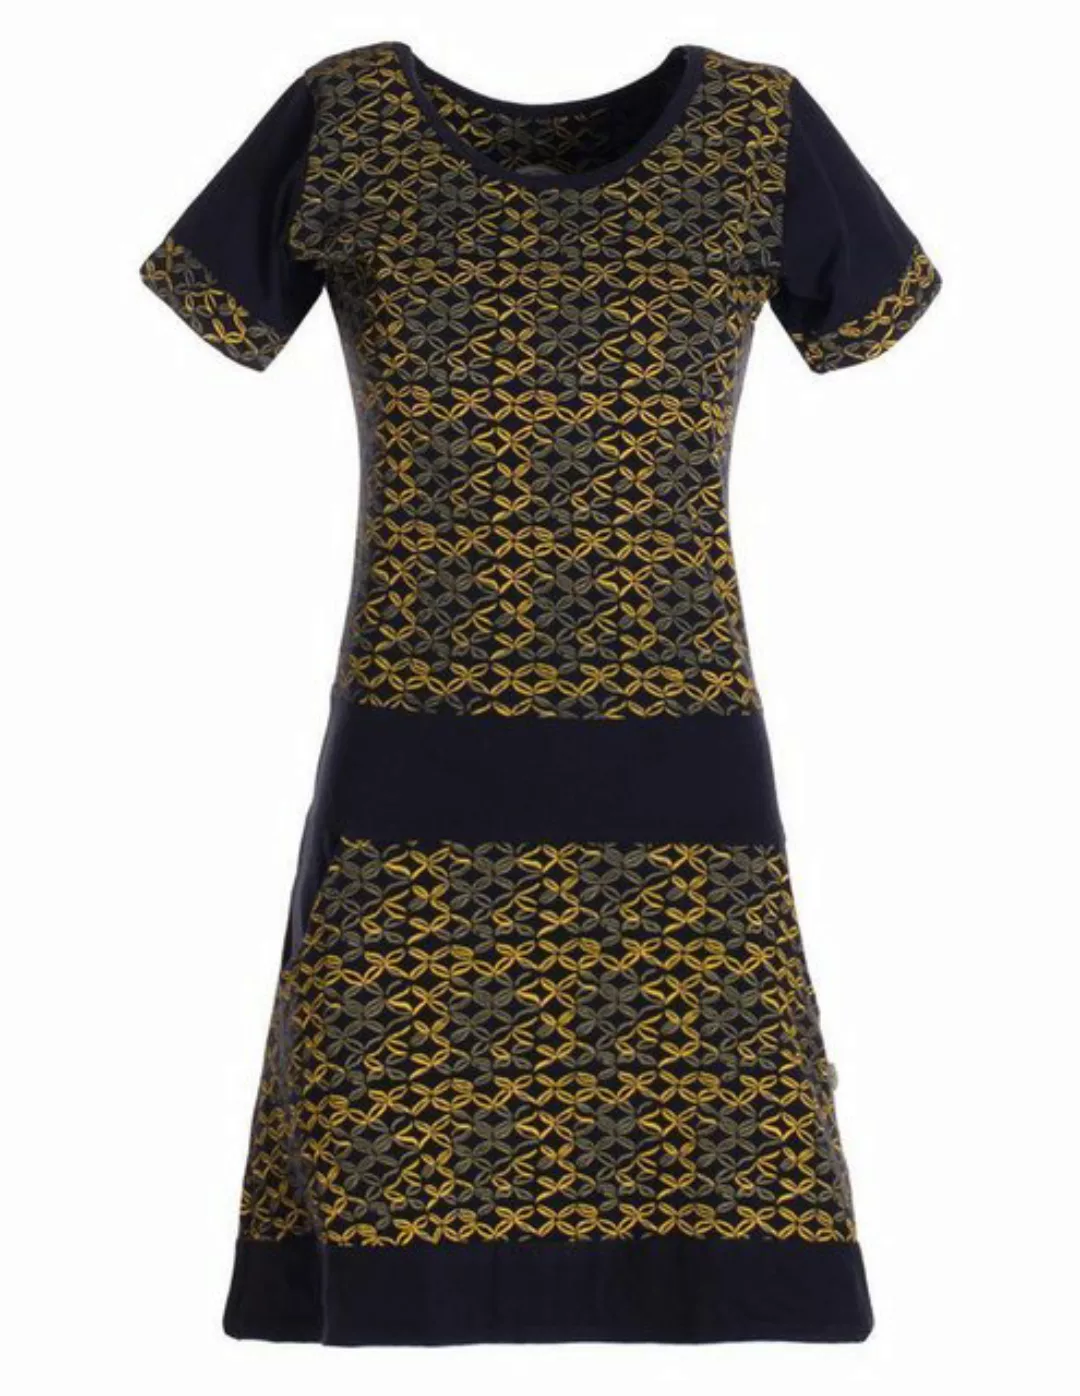 Vishes Tunikakleid Damen Longshirt-Kleid kurzarm Mini-Kleid Tunika-Kleid T- günstig online kaufen